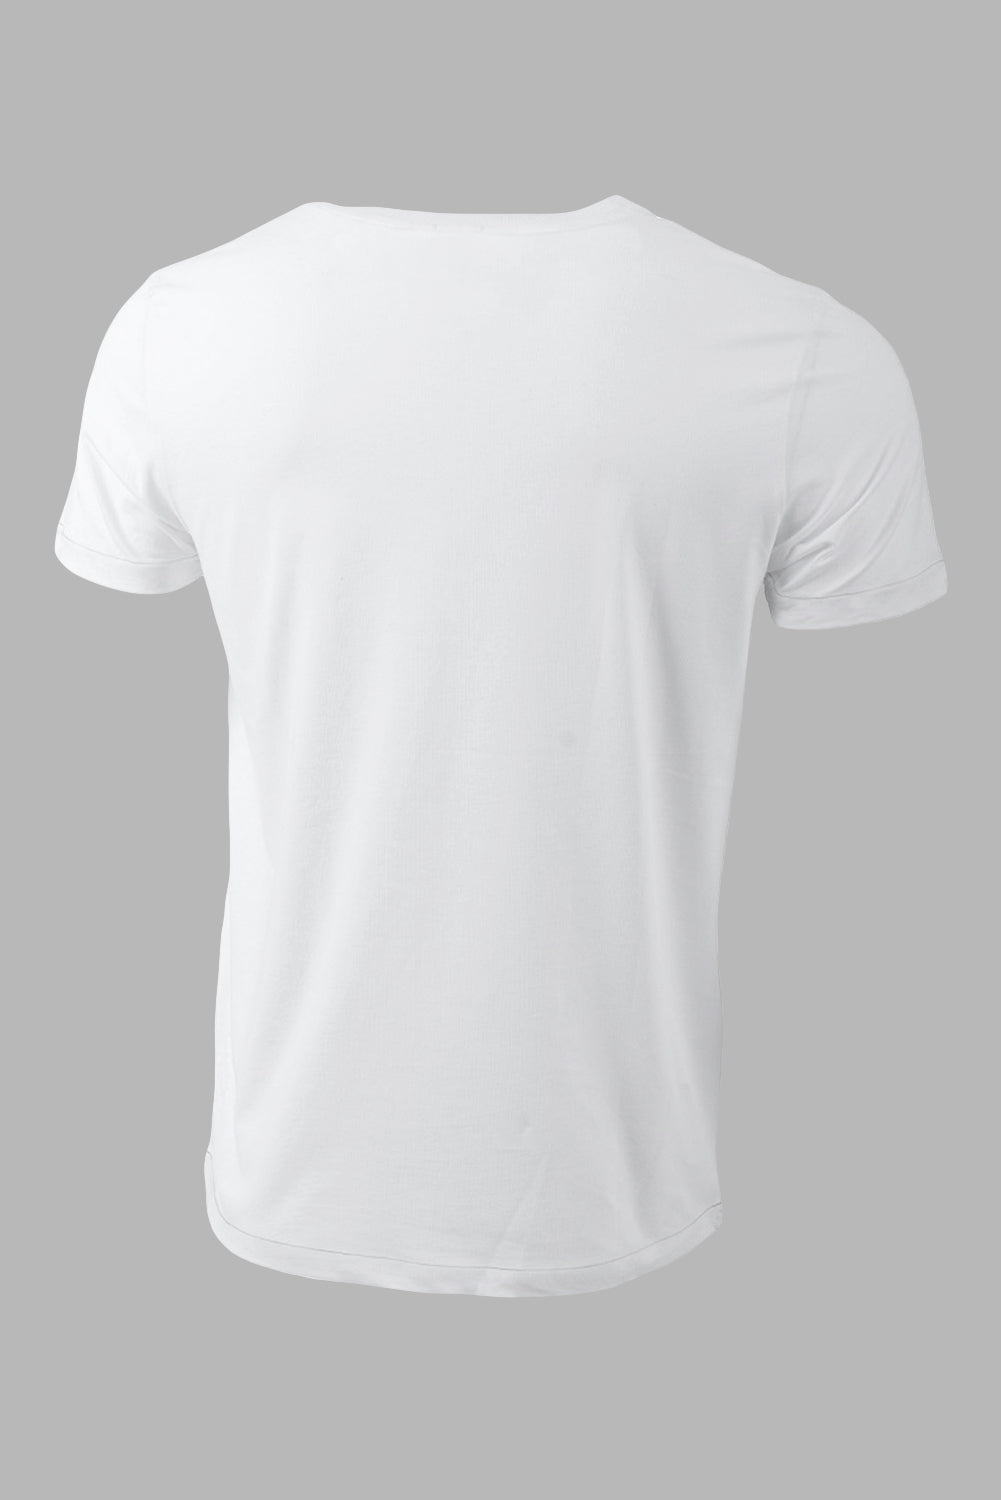 White Talk To Me Goose American Flag Graphic Print Men's T Shirt Men's Tops JT's Designer Fashion